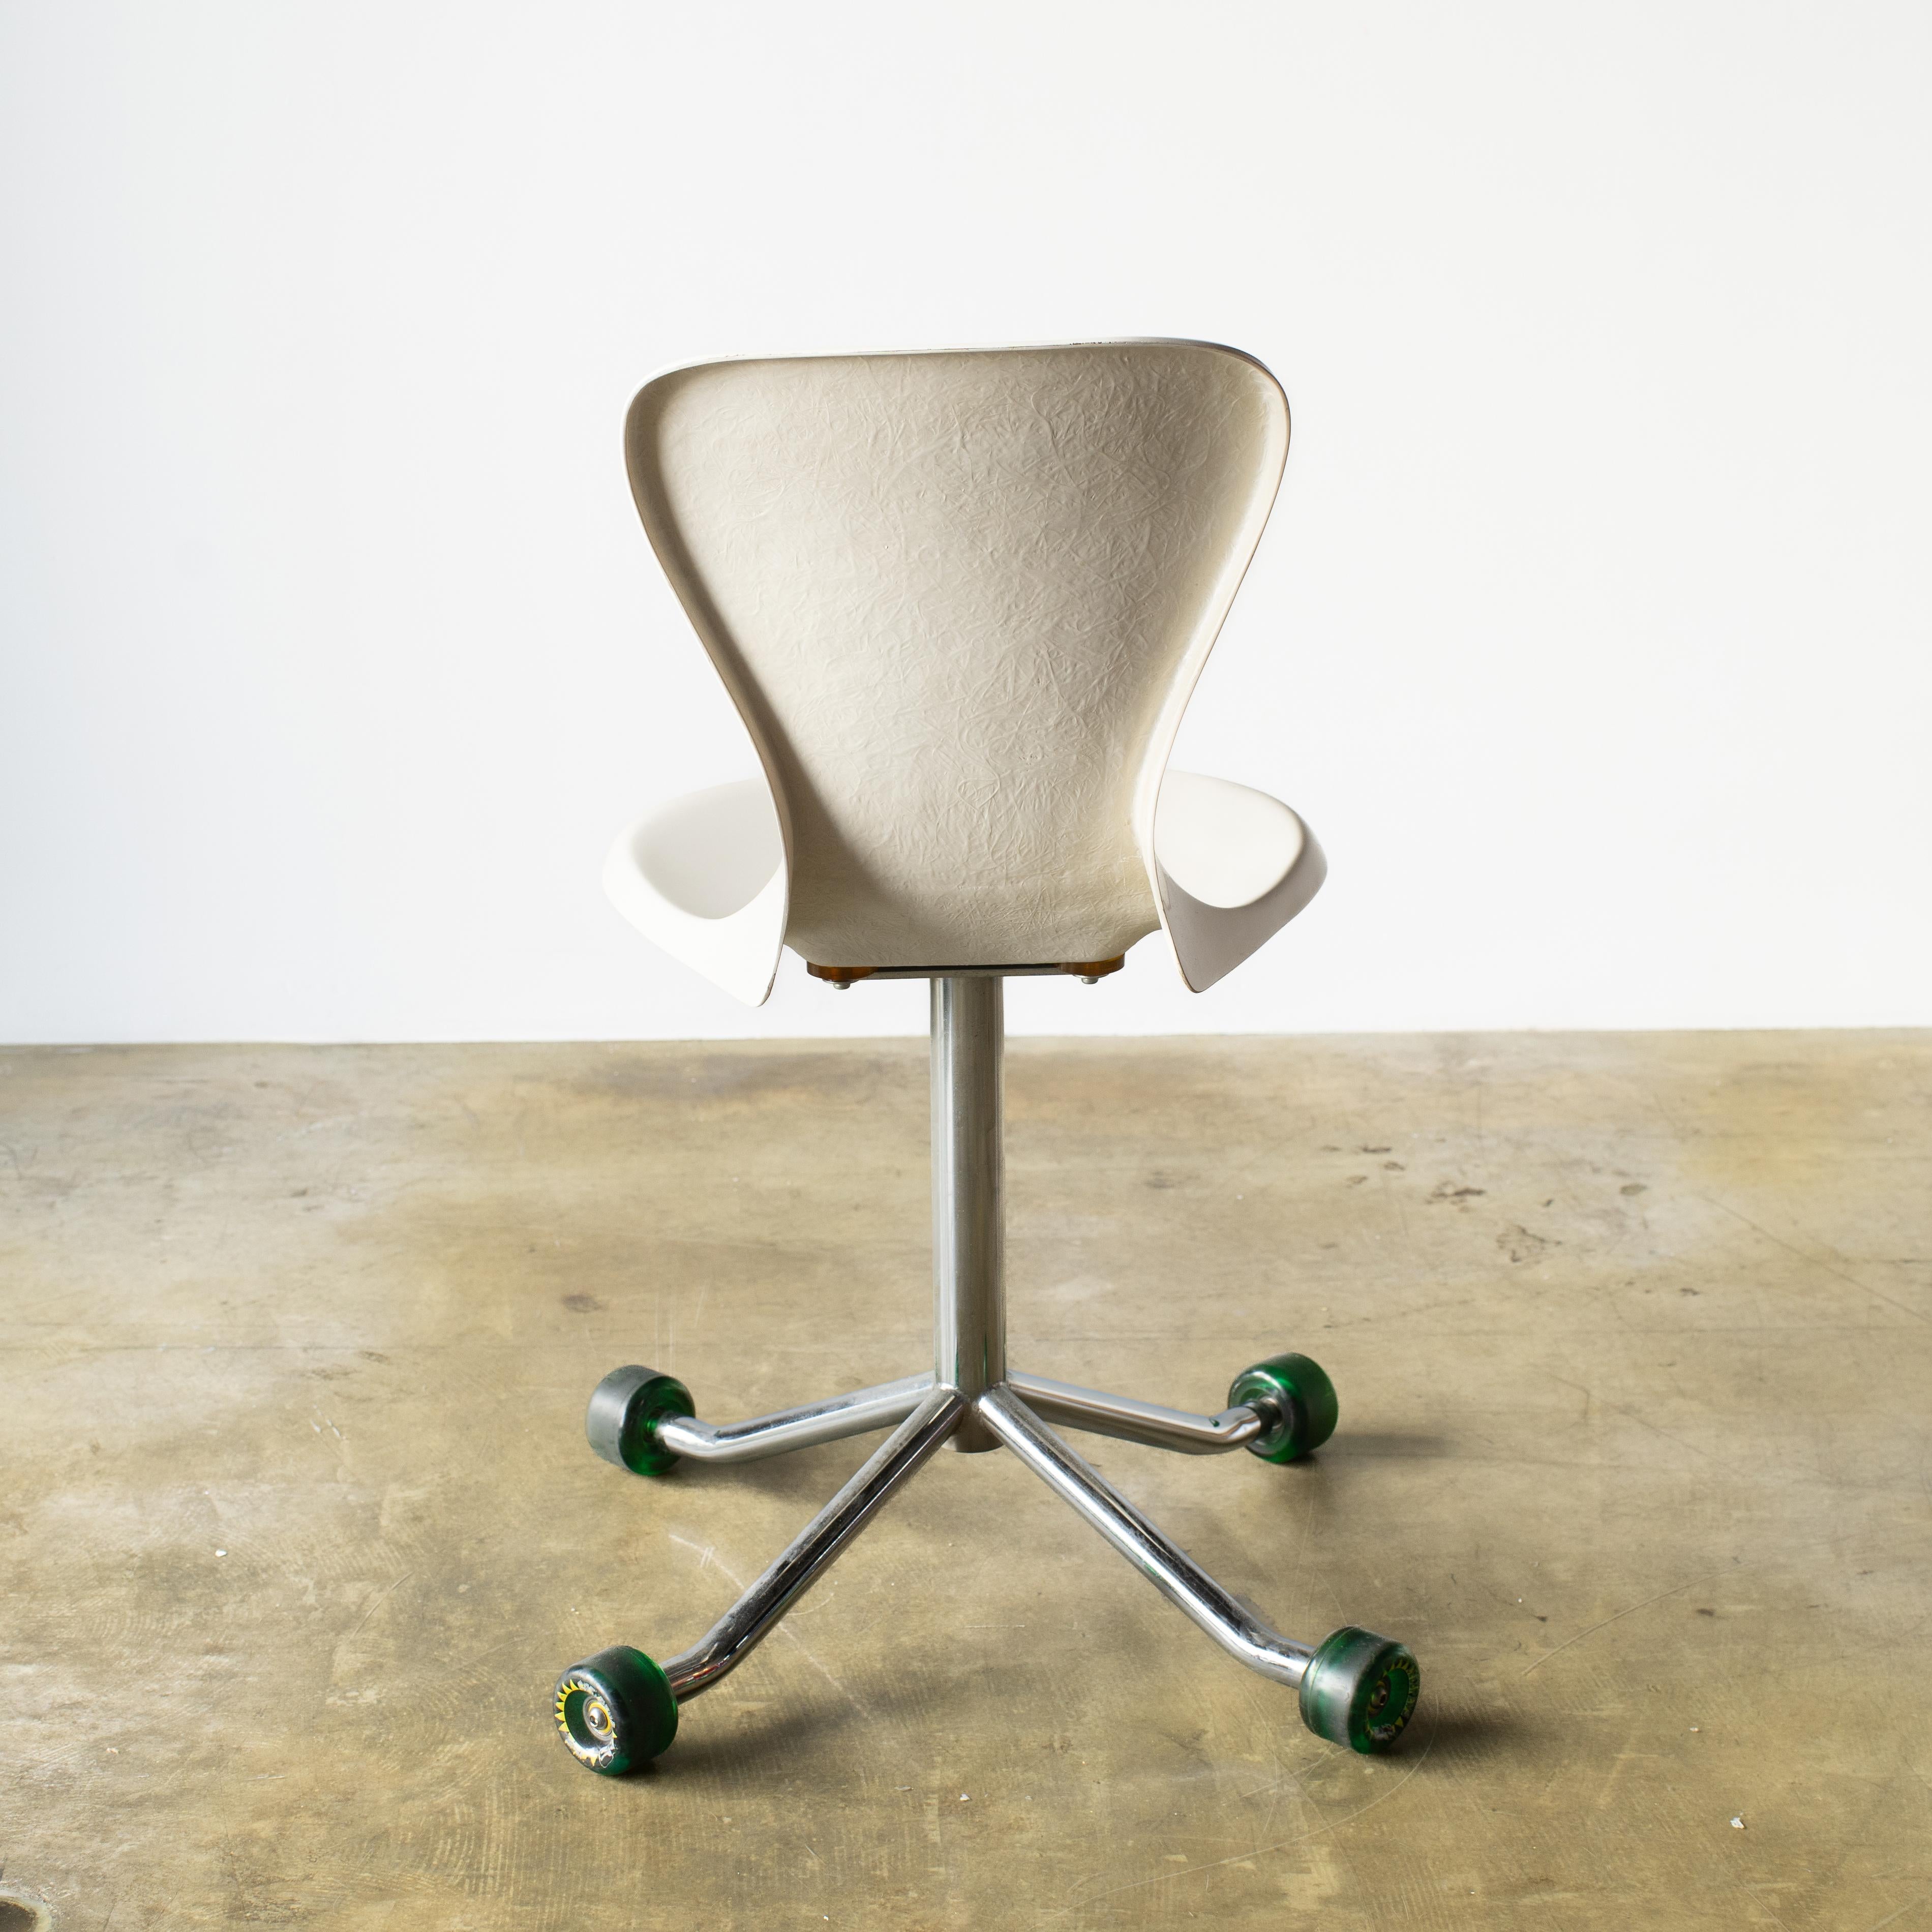 Space Age Chair with skateboard wheels  Hajime Okajima Y2K style design For Sale